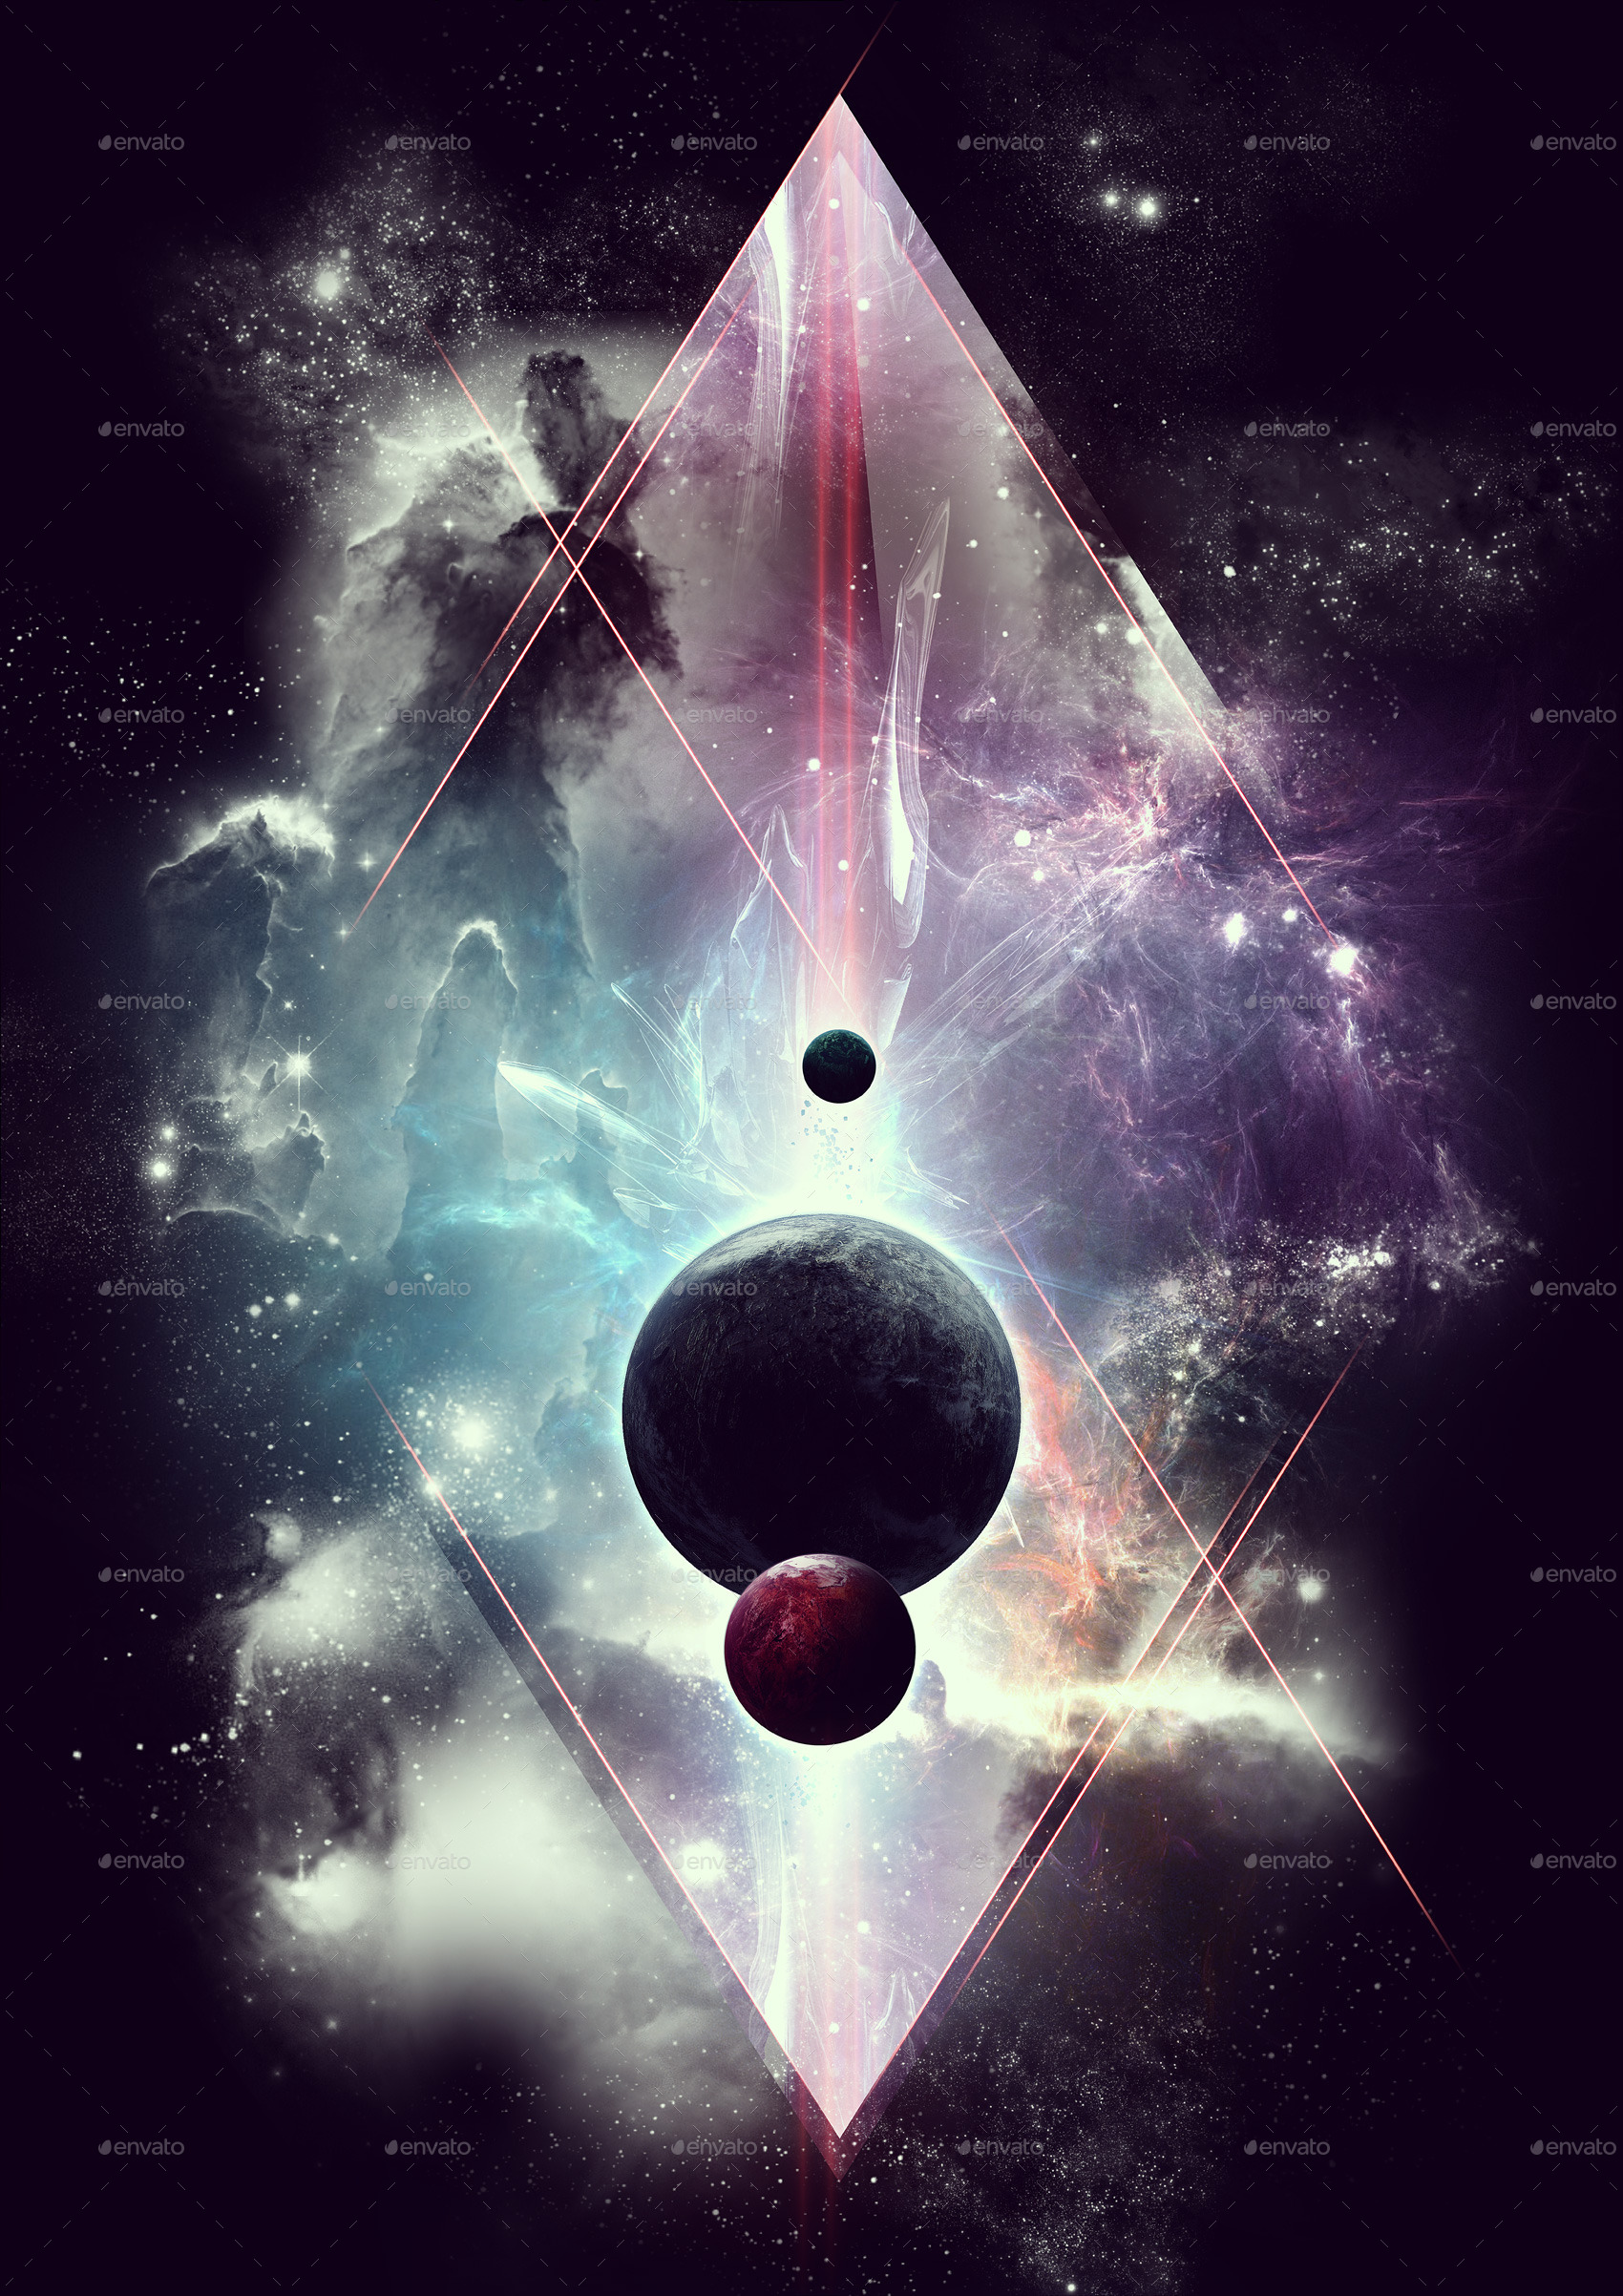 Diablo Space Art - Poster by ujangajojing | GraphicRiver